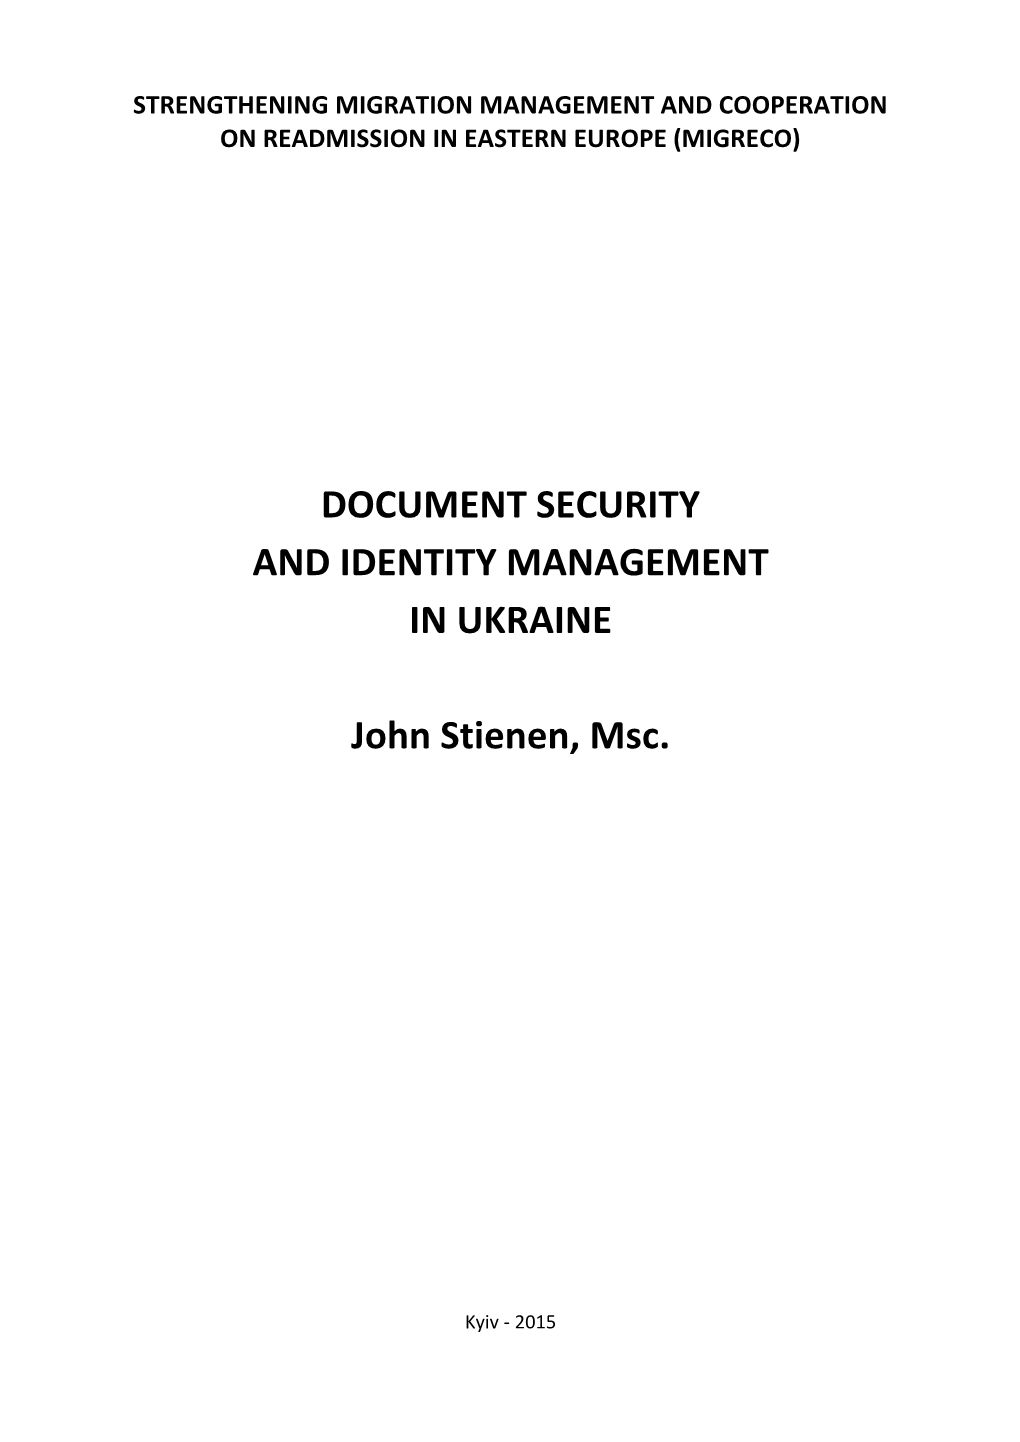 Document Security and Identity Management in Ukraine